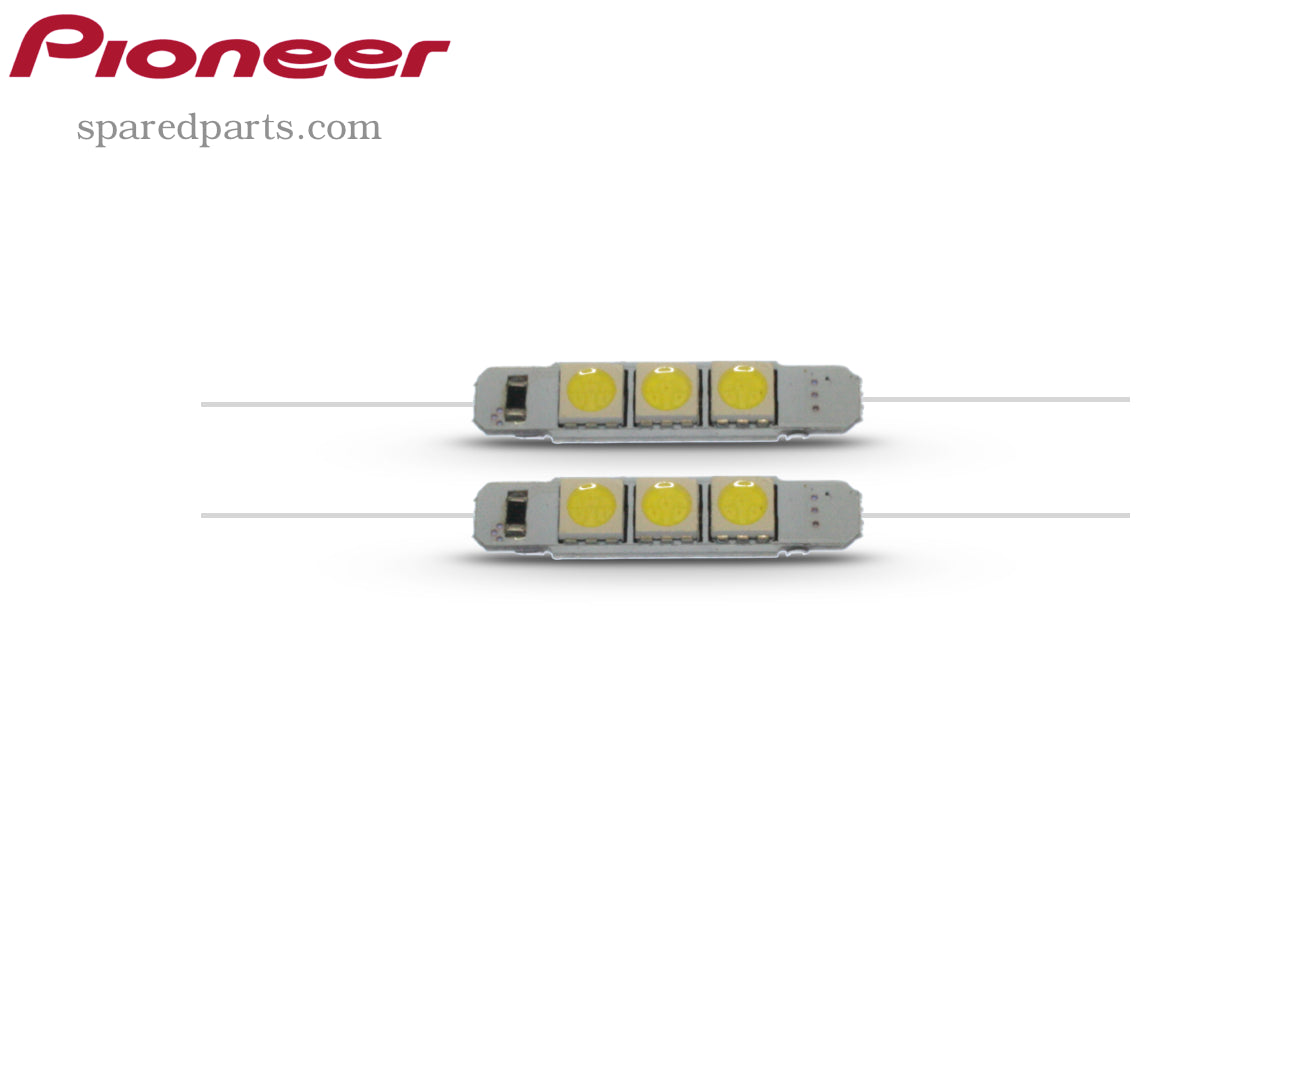 Pioneer CT-F500 Meter Lamps (LED Upgrade)